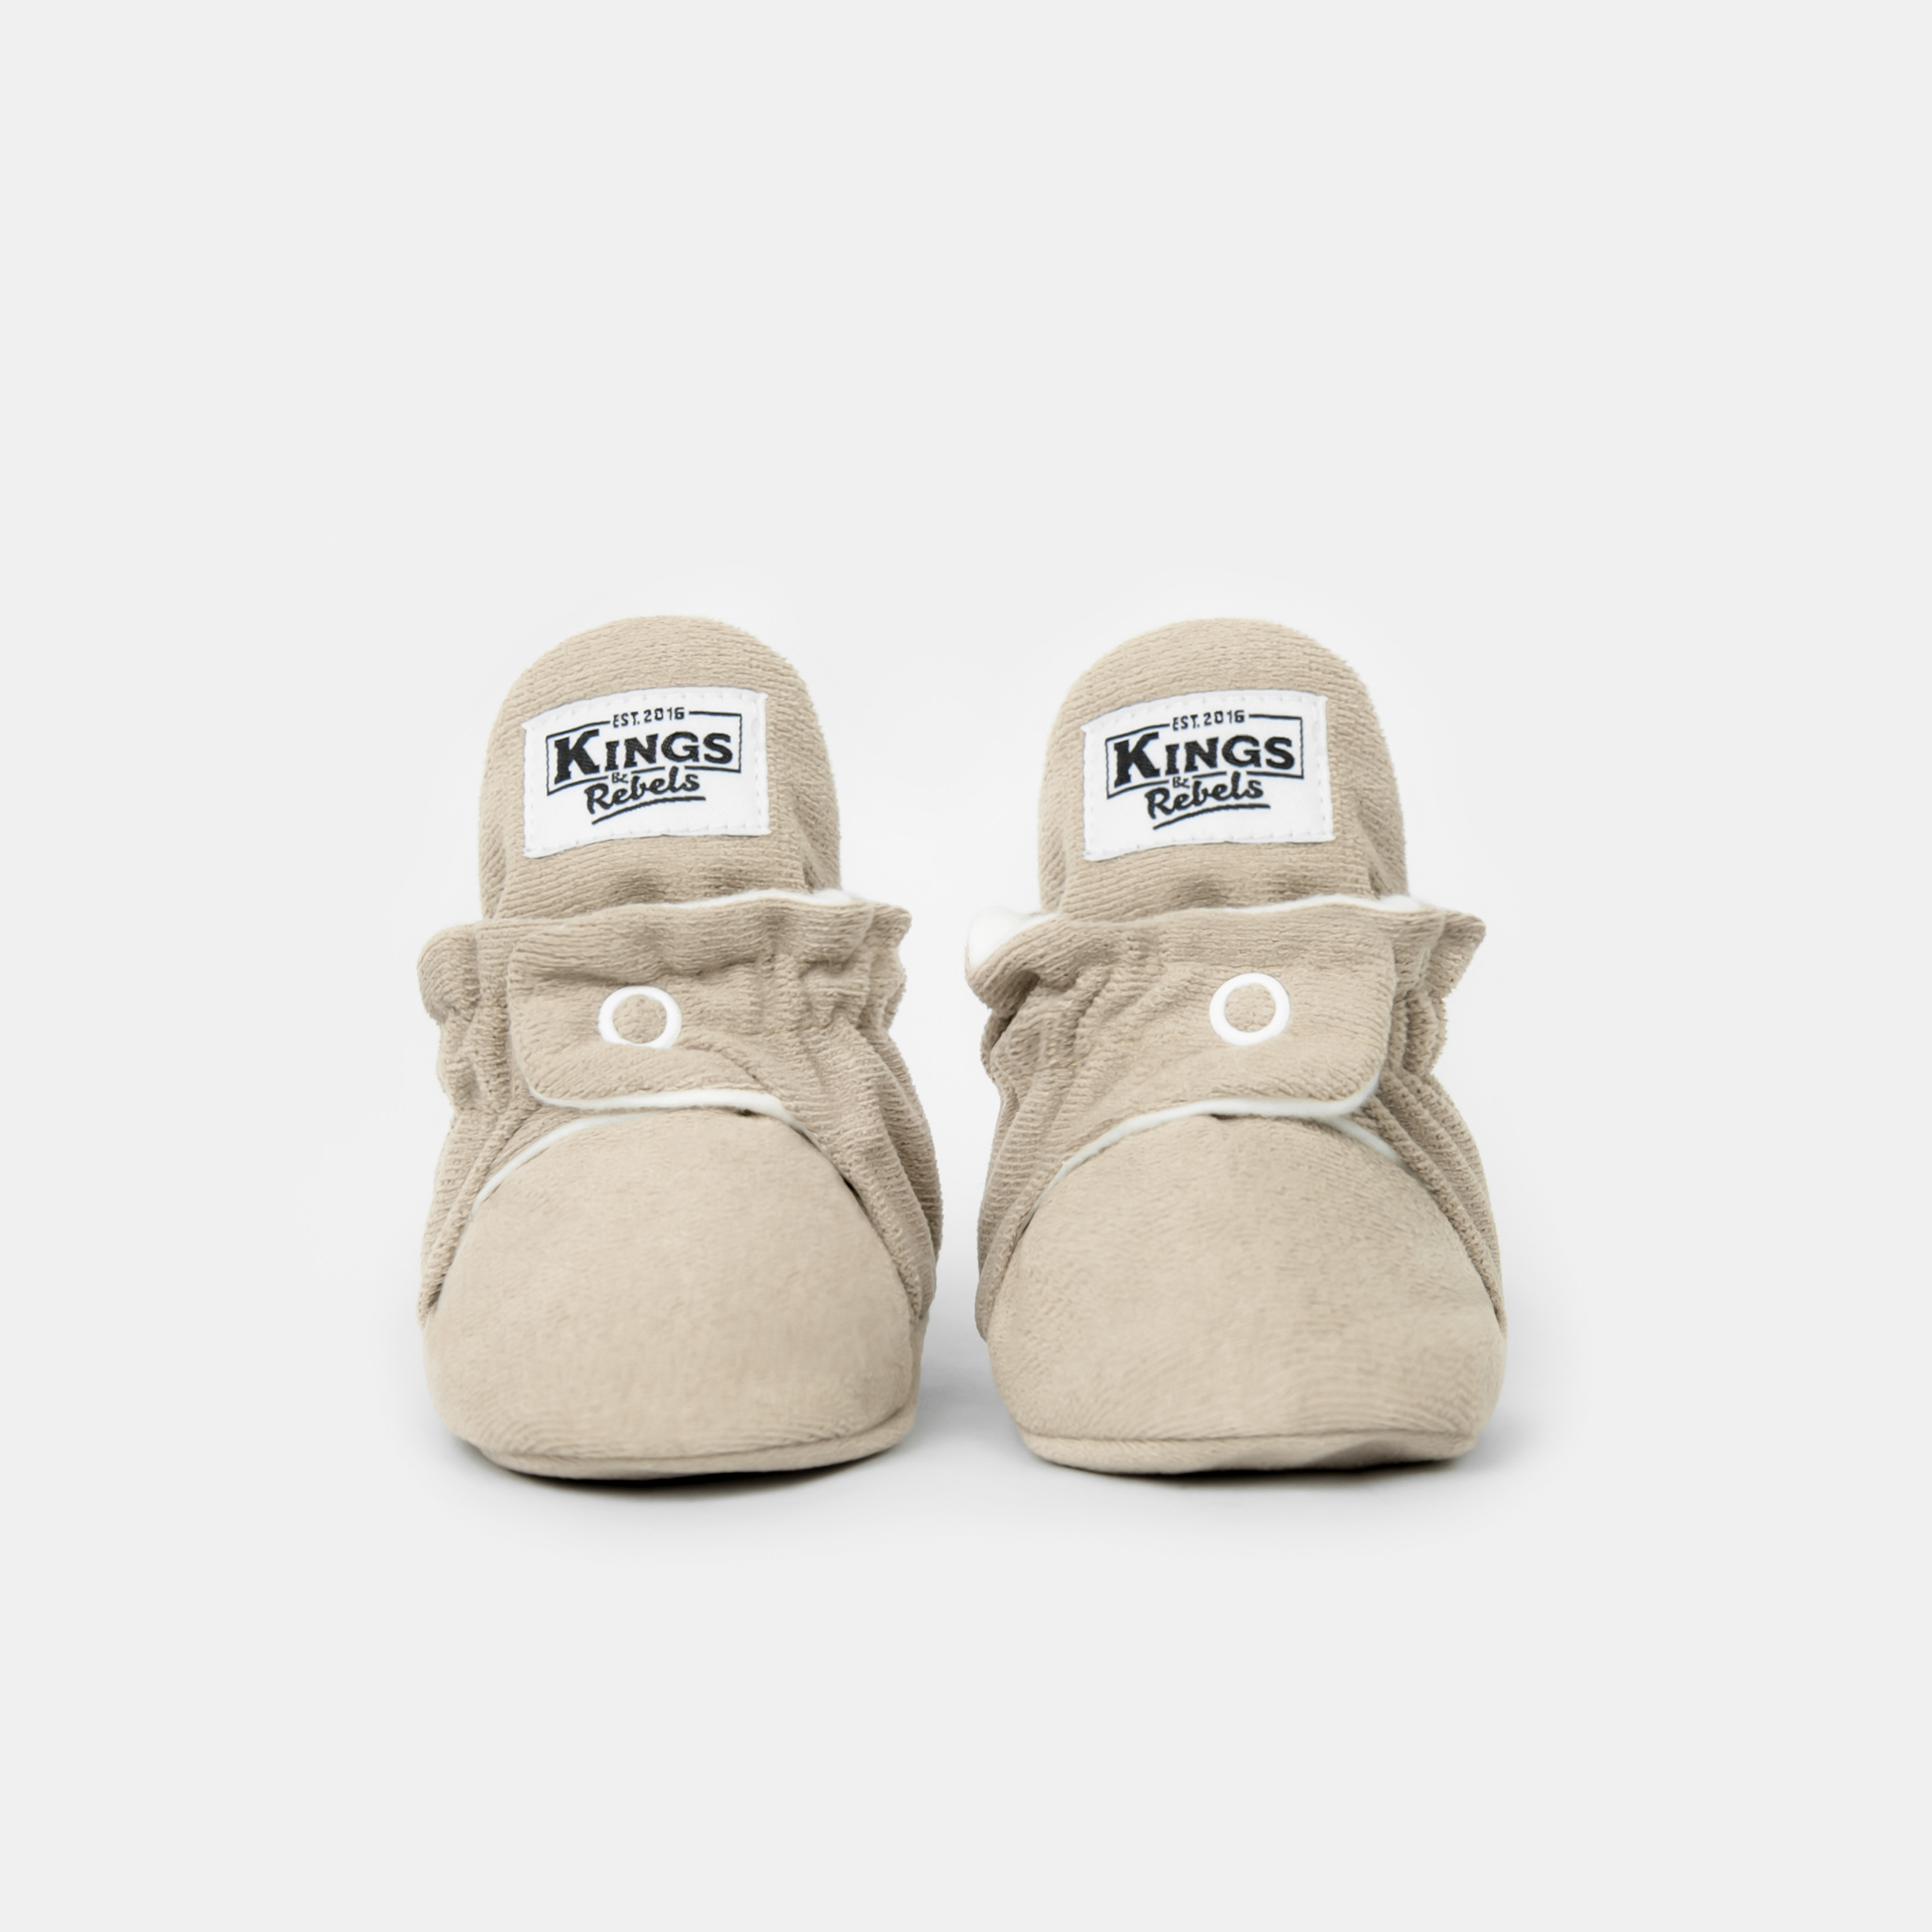 Schuhe & Co Classic/Gamuza ivory Babyschühchen 18 Monate